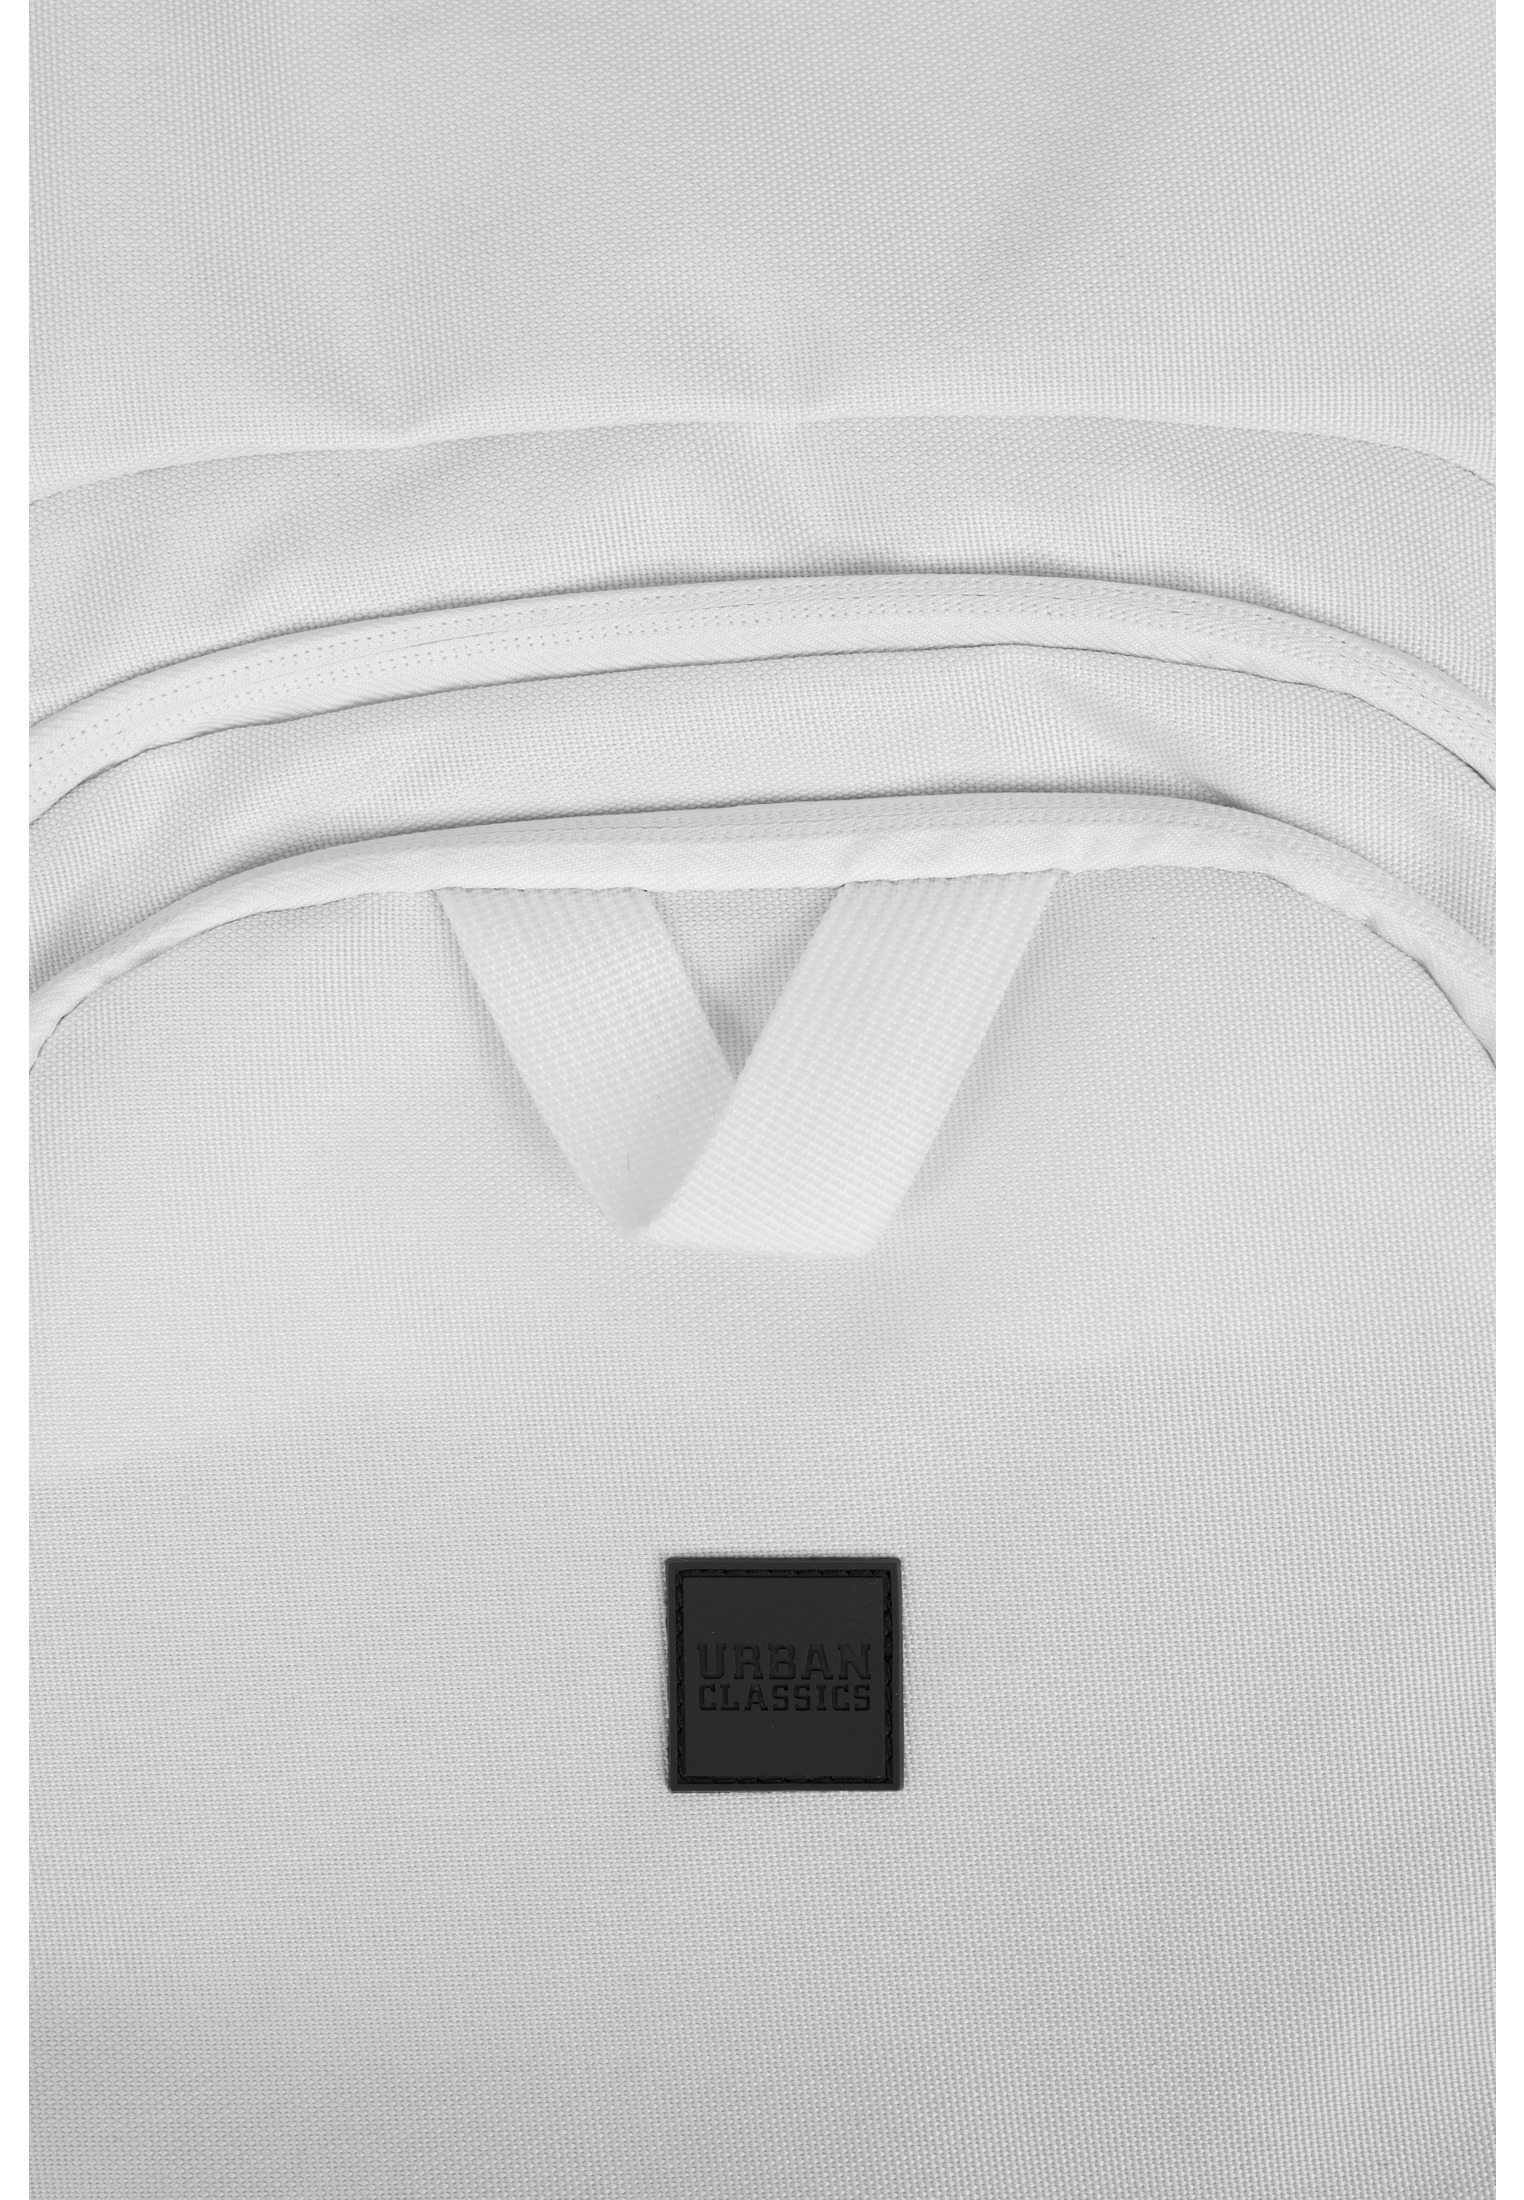 Taschen Ball Gym Bag in Farbe black/white/white